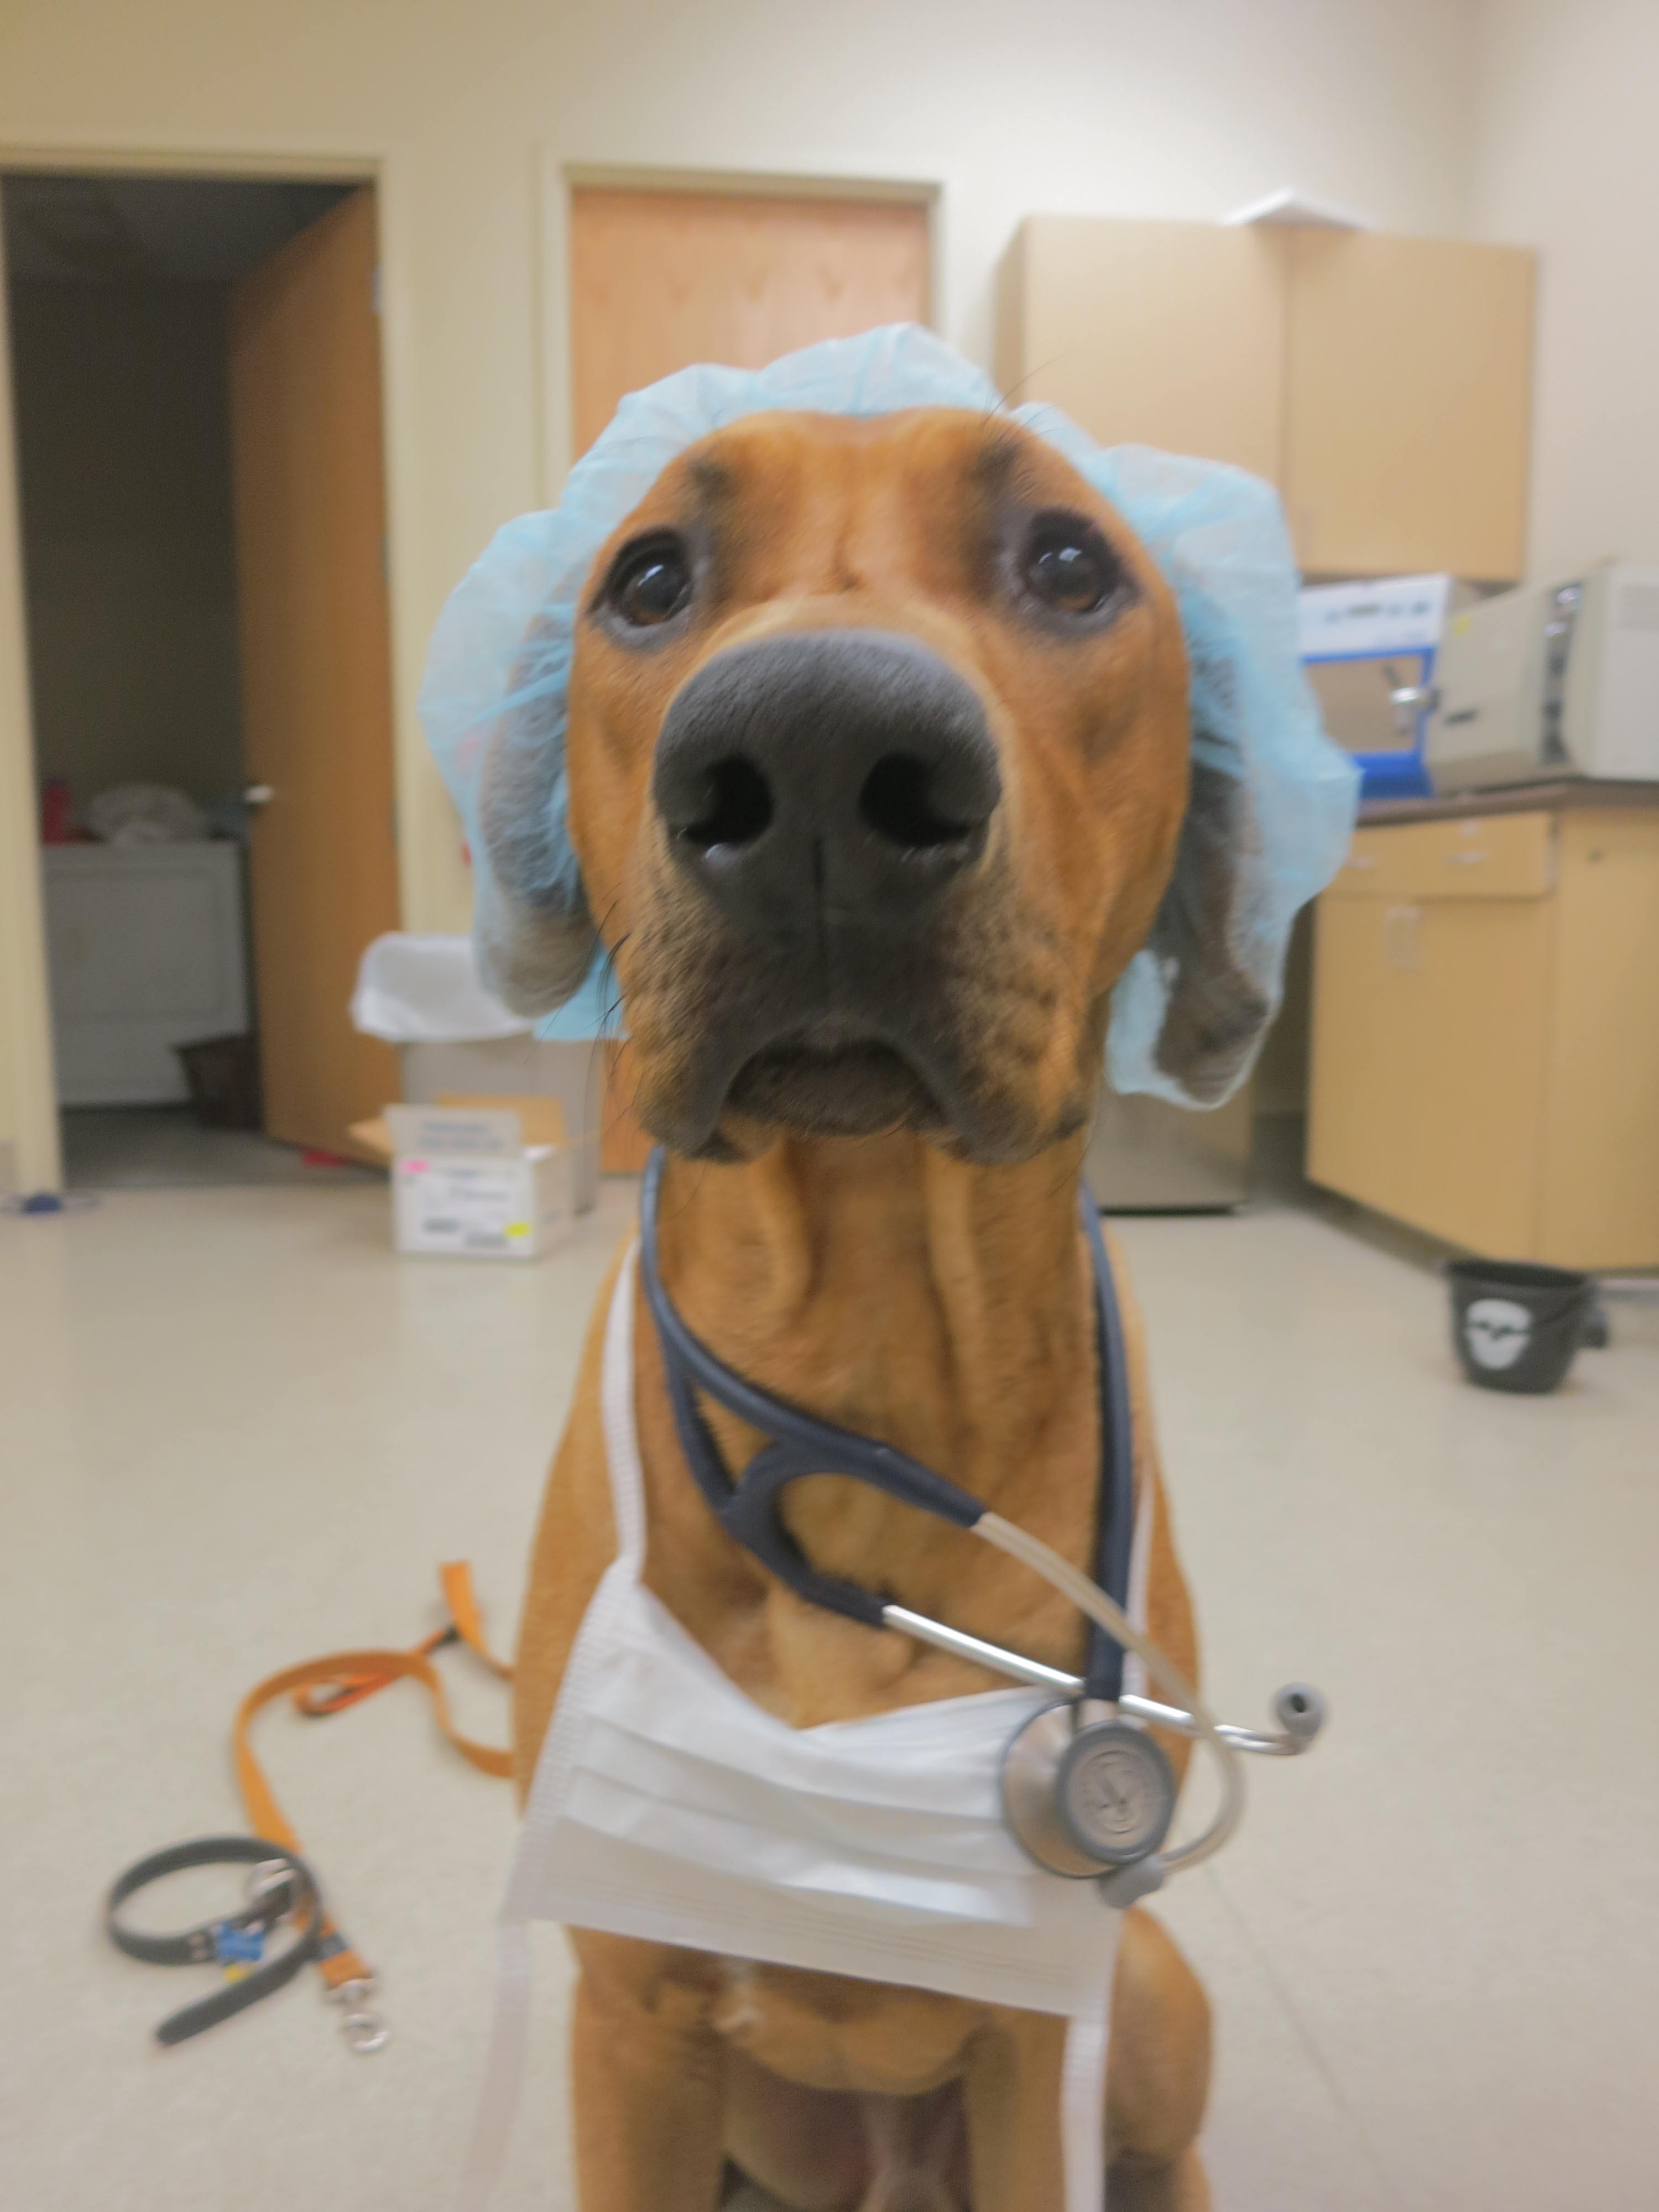 ASK DOCTOR BONES, THE ADVICE DOG